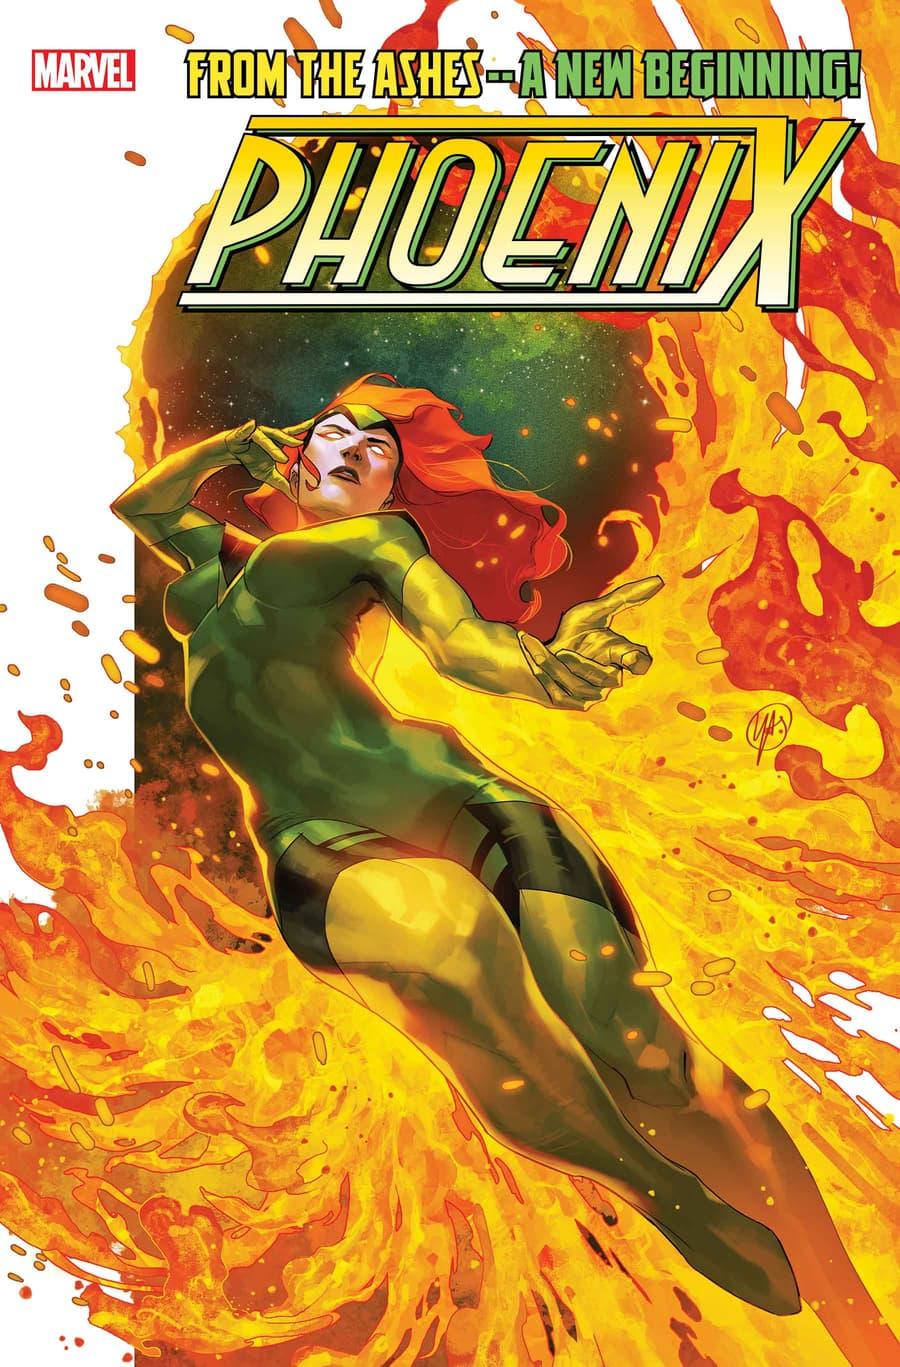 Phoenix #1 cover art